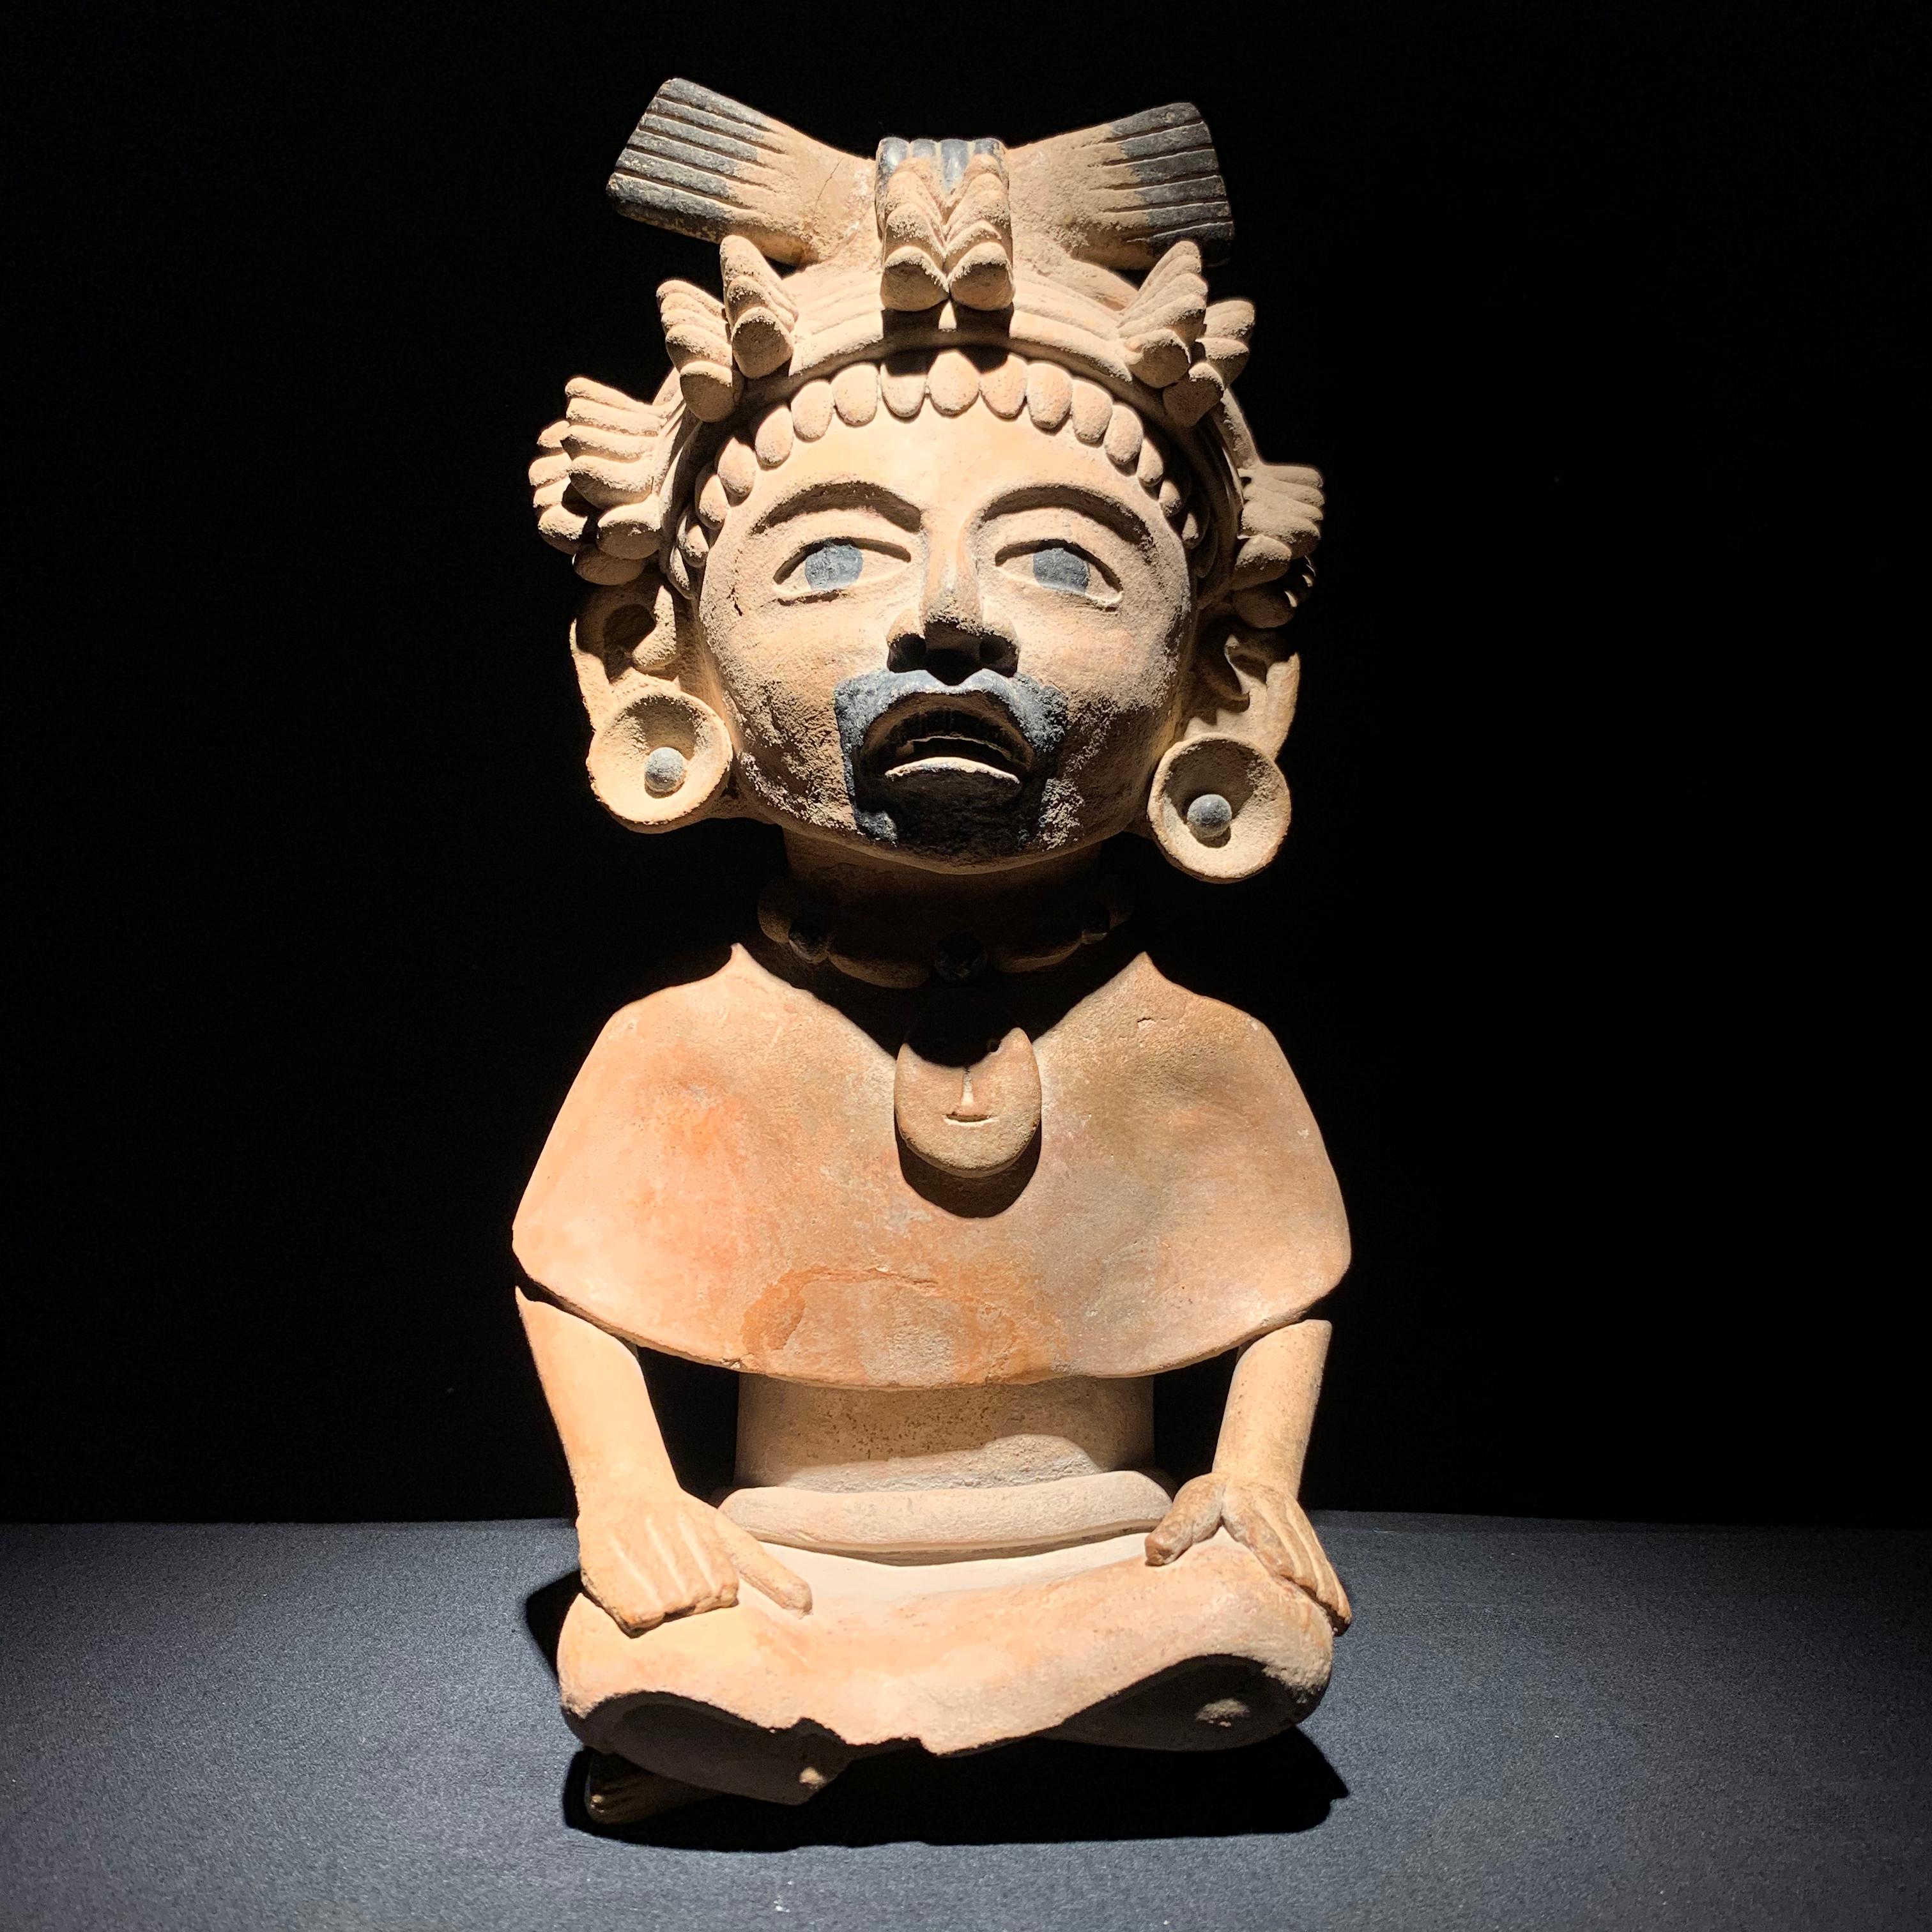 Unknown Figurative Sculpture - Veracruz Mexico Pre-Columbian ceramic Warrior figure sculpture